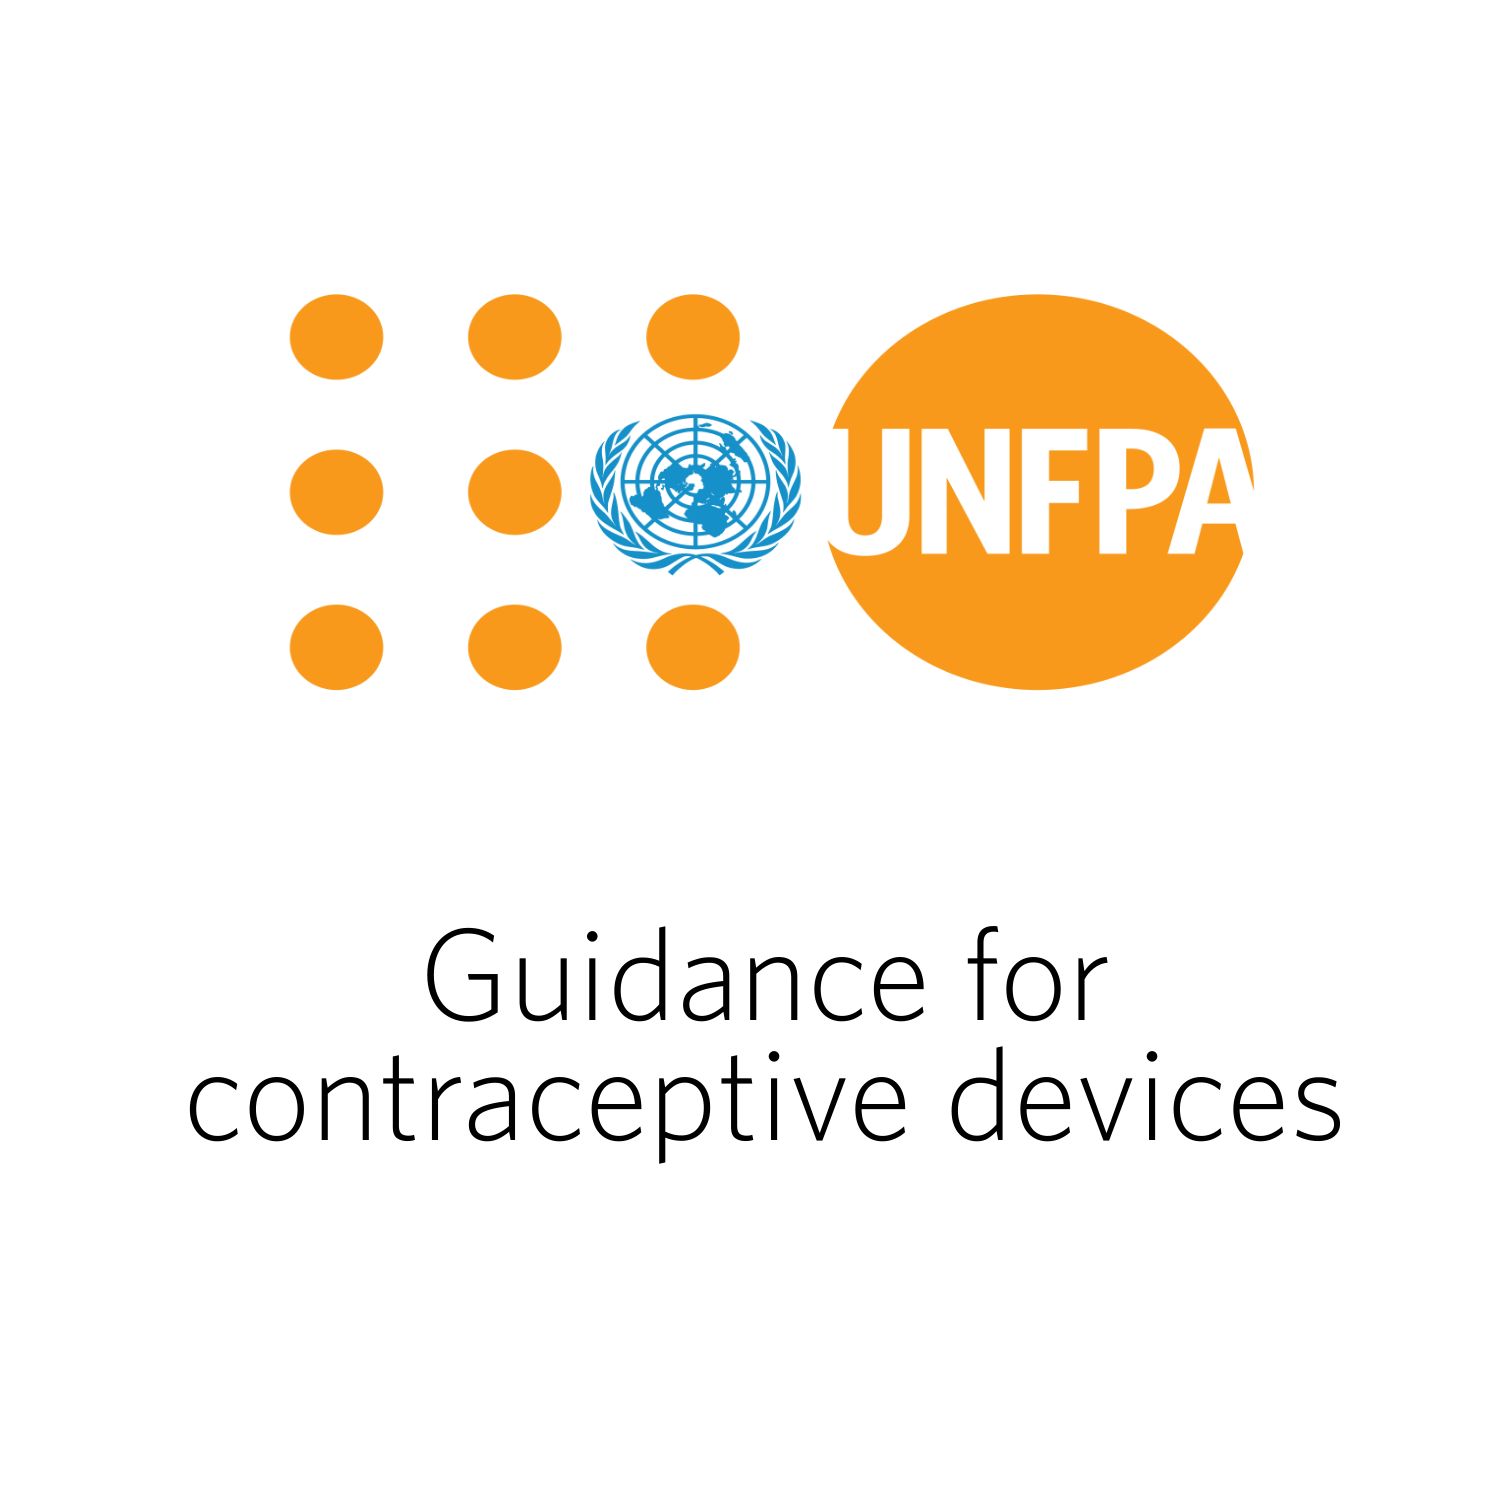 Guidance for contraceptive devices: male latex condoms, female condoms and intrauterine devices